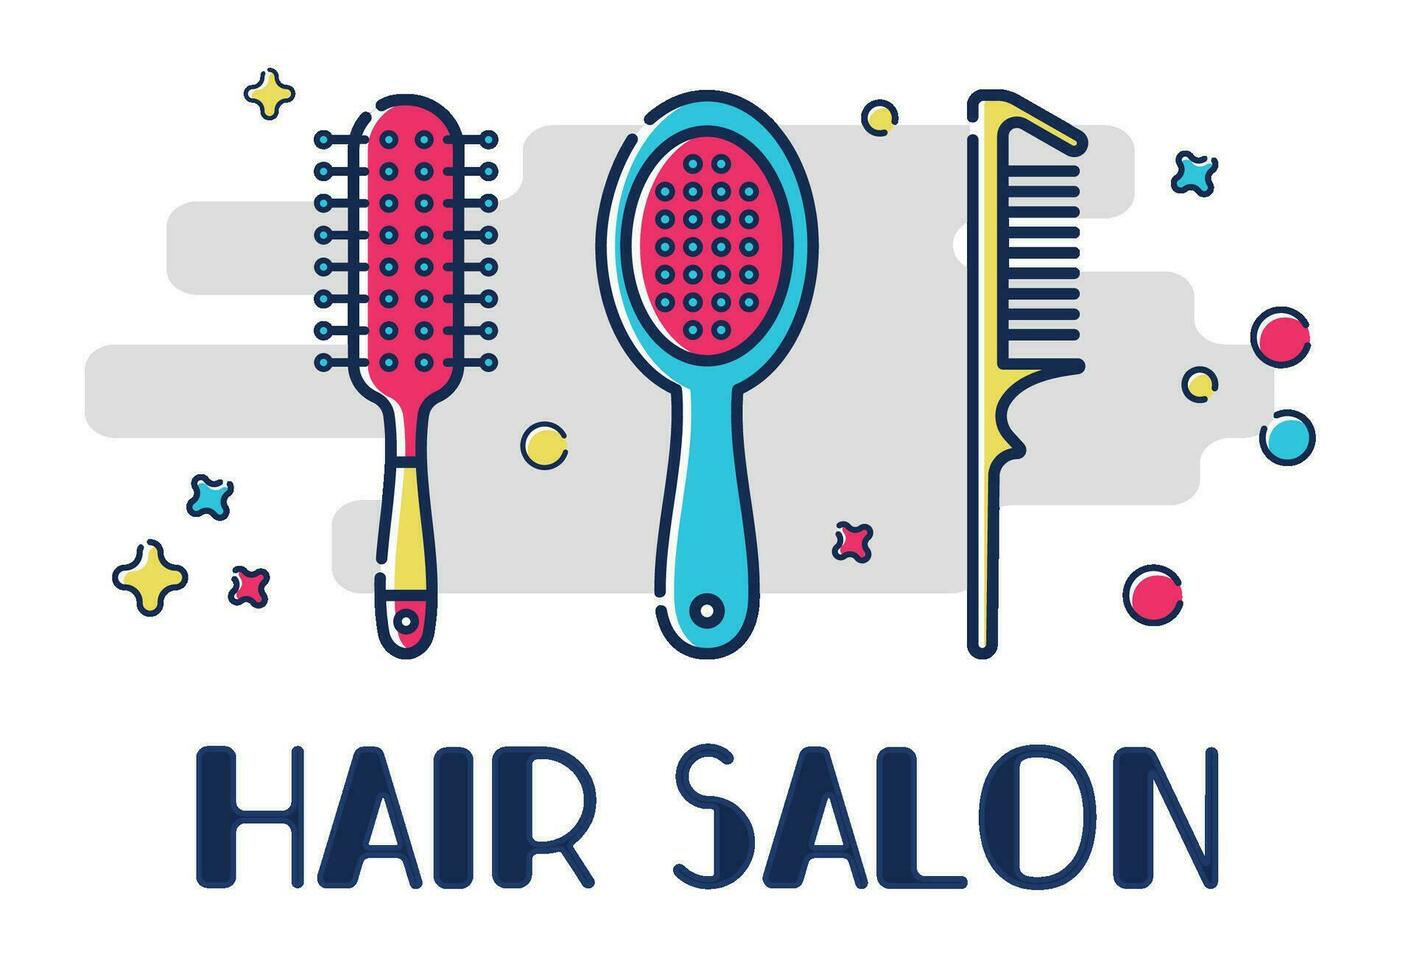 Hair salon vector illustration